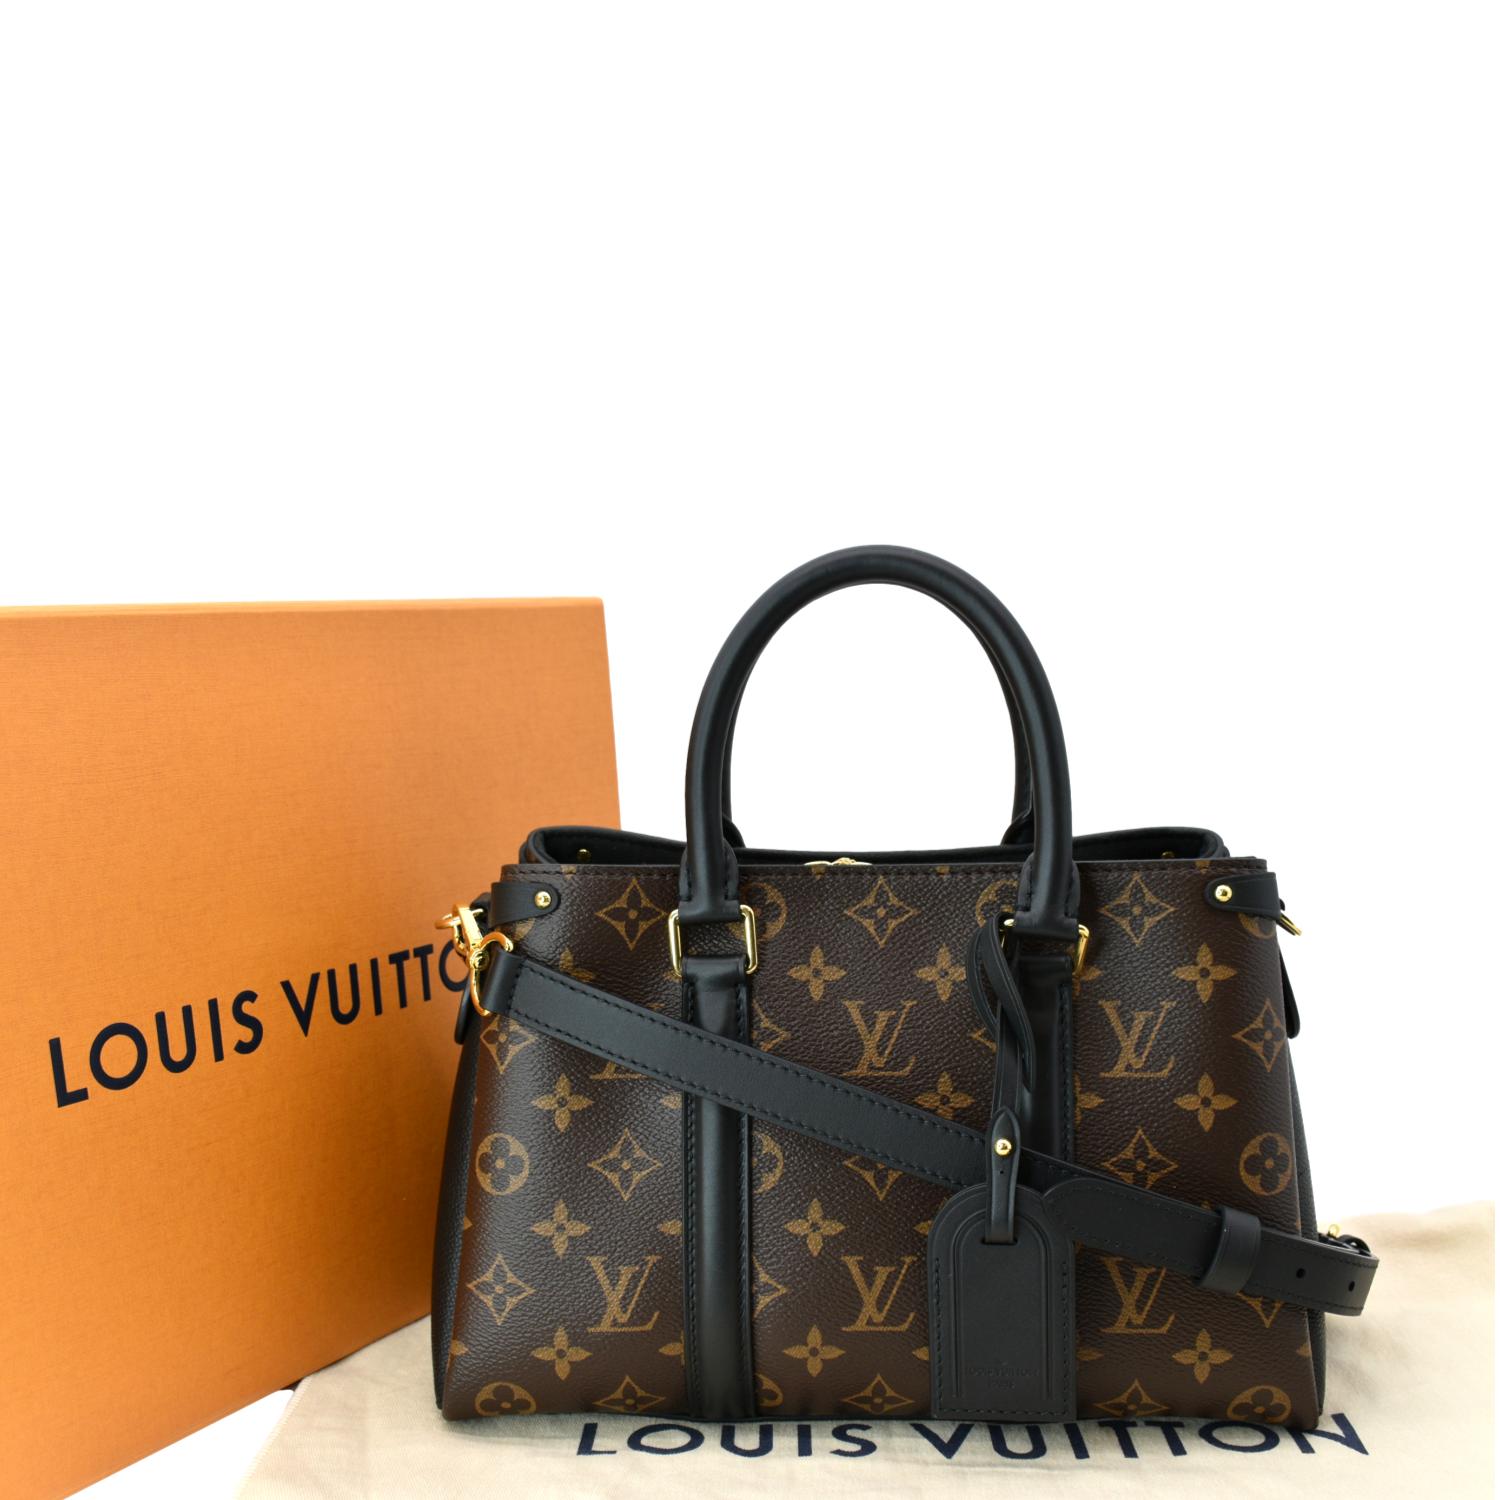 Louis Vuitton Soufflot Bb in Black